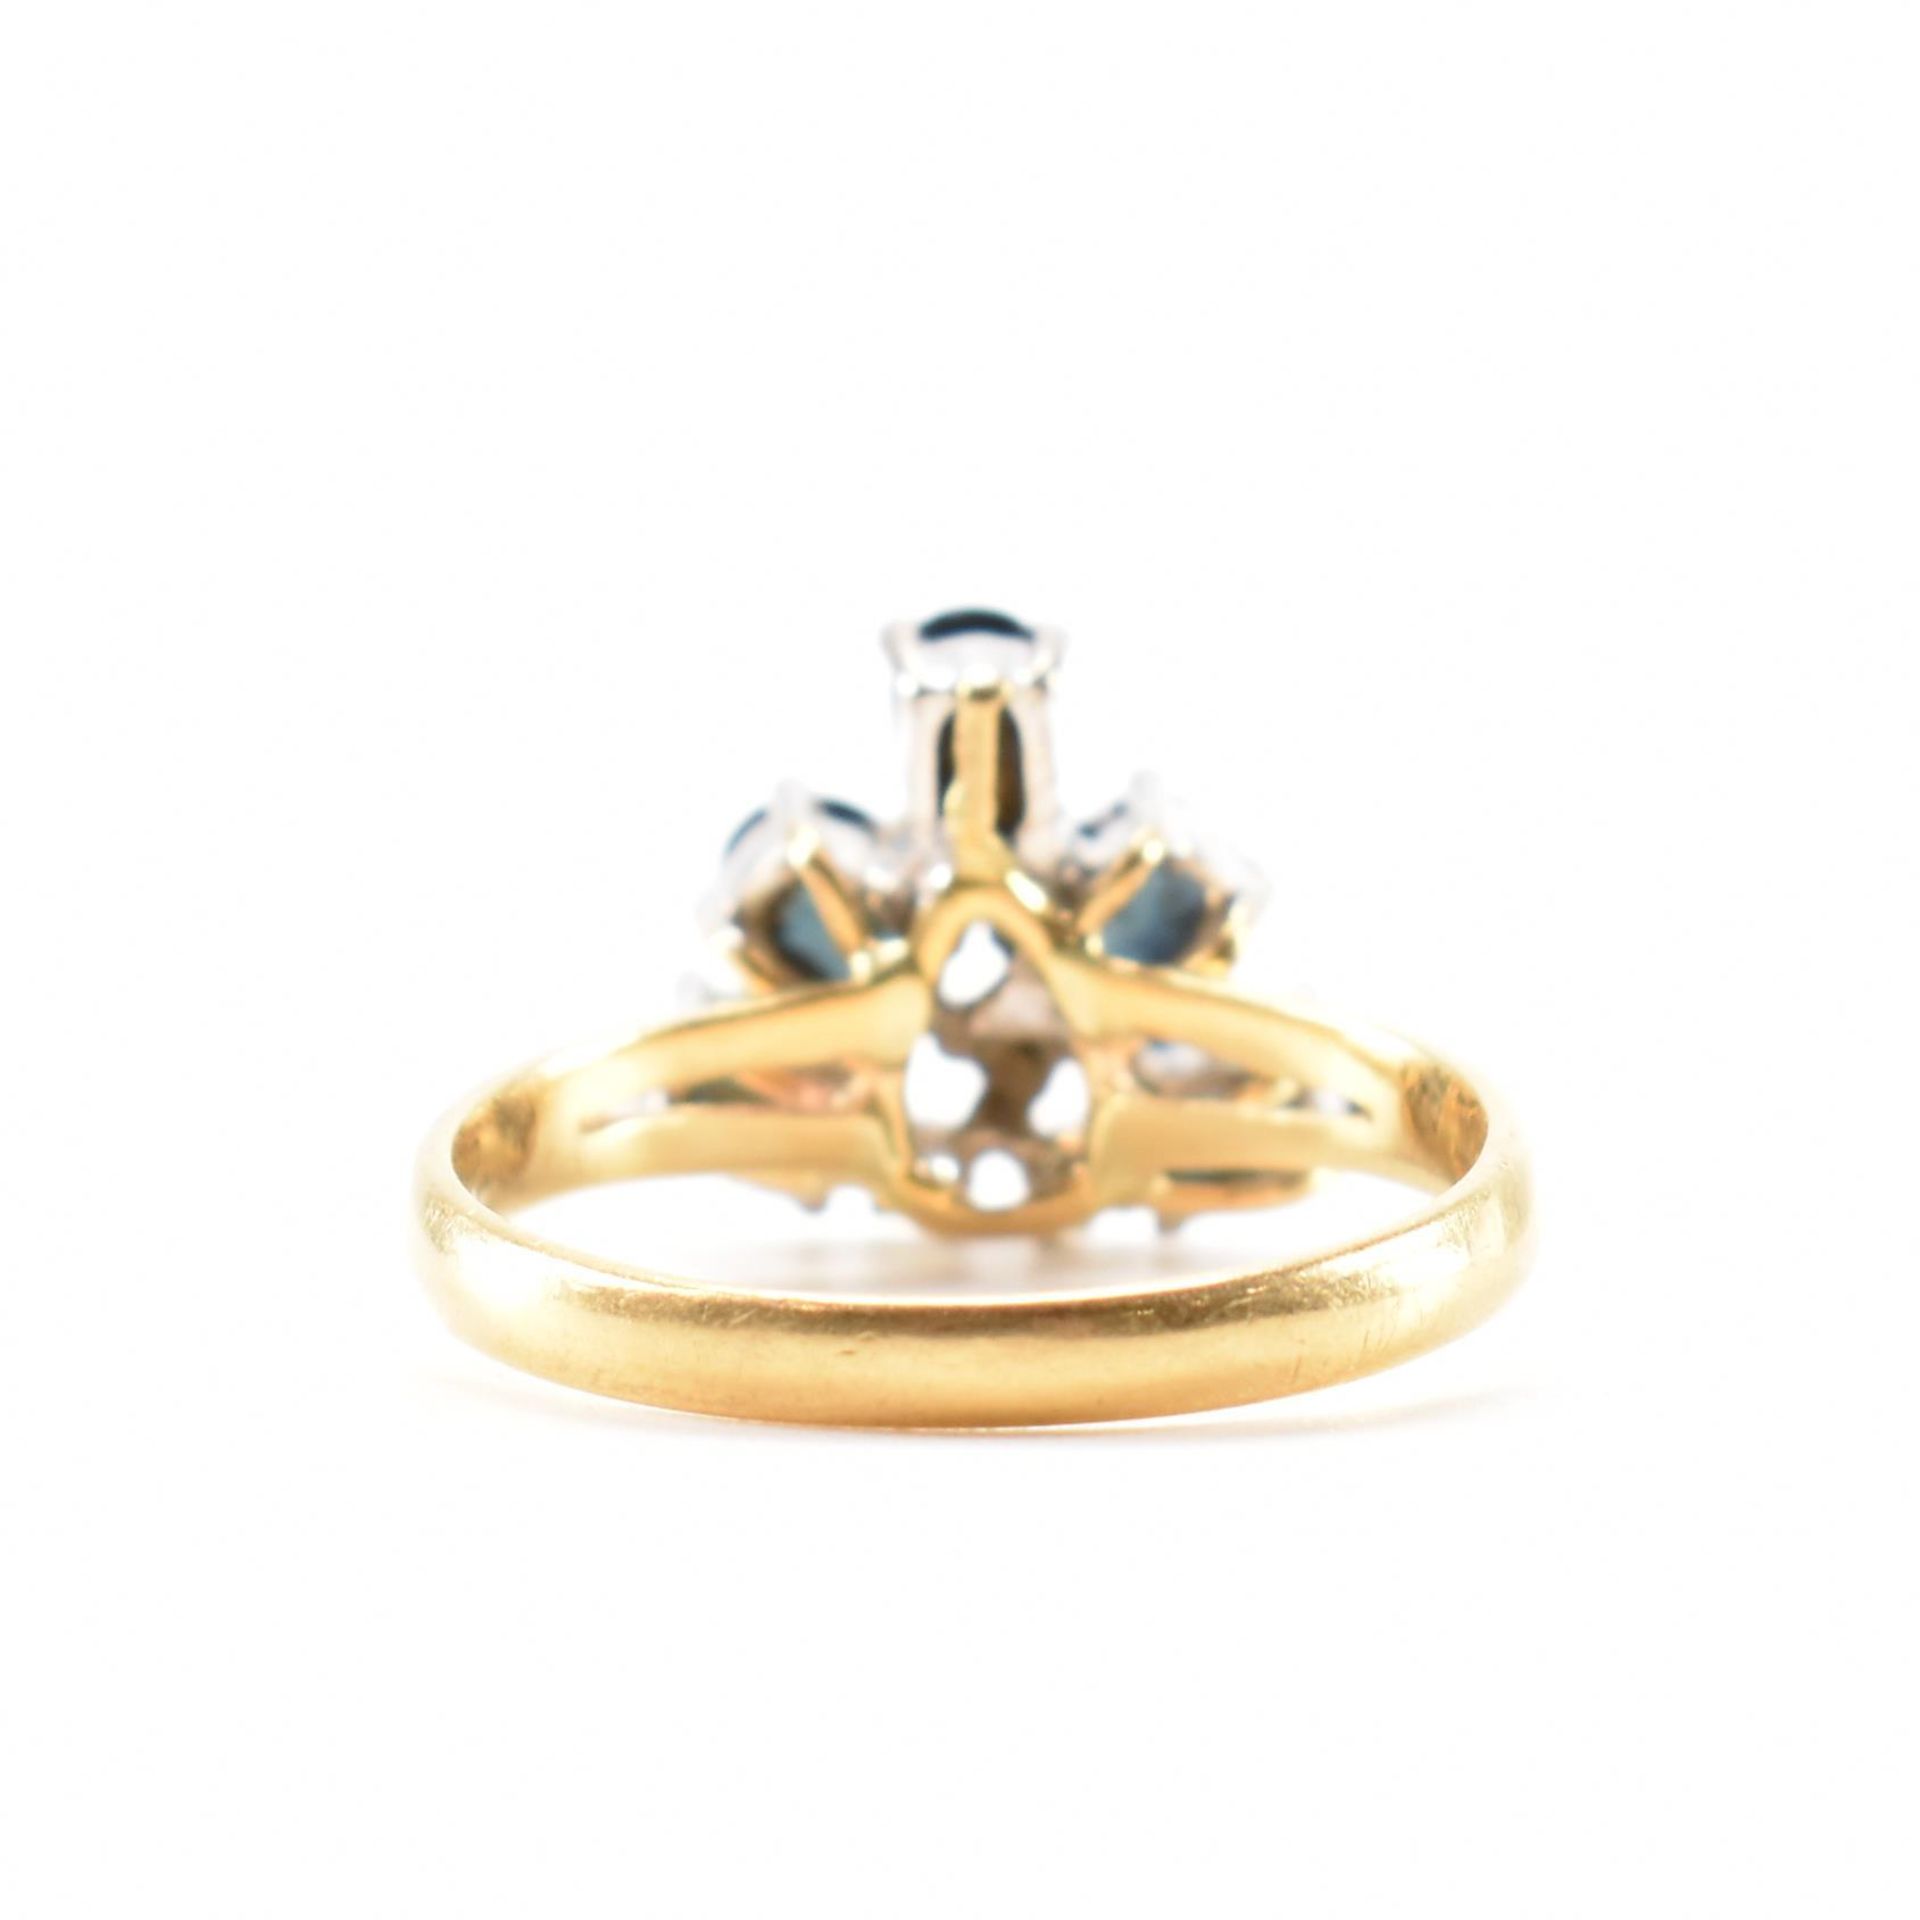 HALLMARKED 18CT GOLD SAPPHIRE & DIAMOND RING - Image 3 of 9